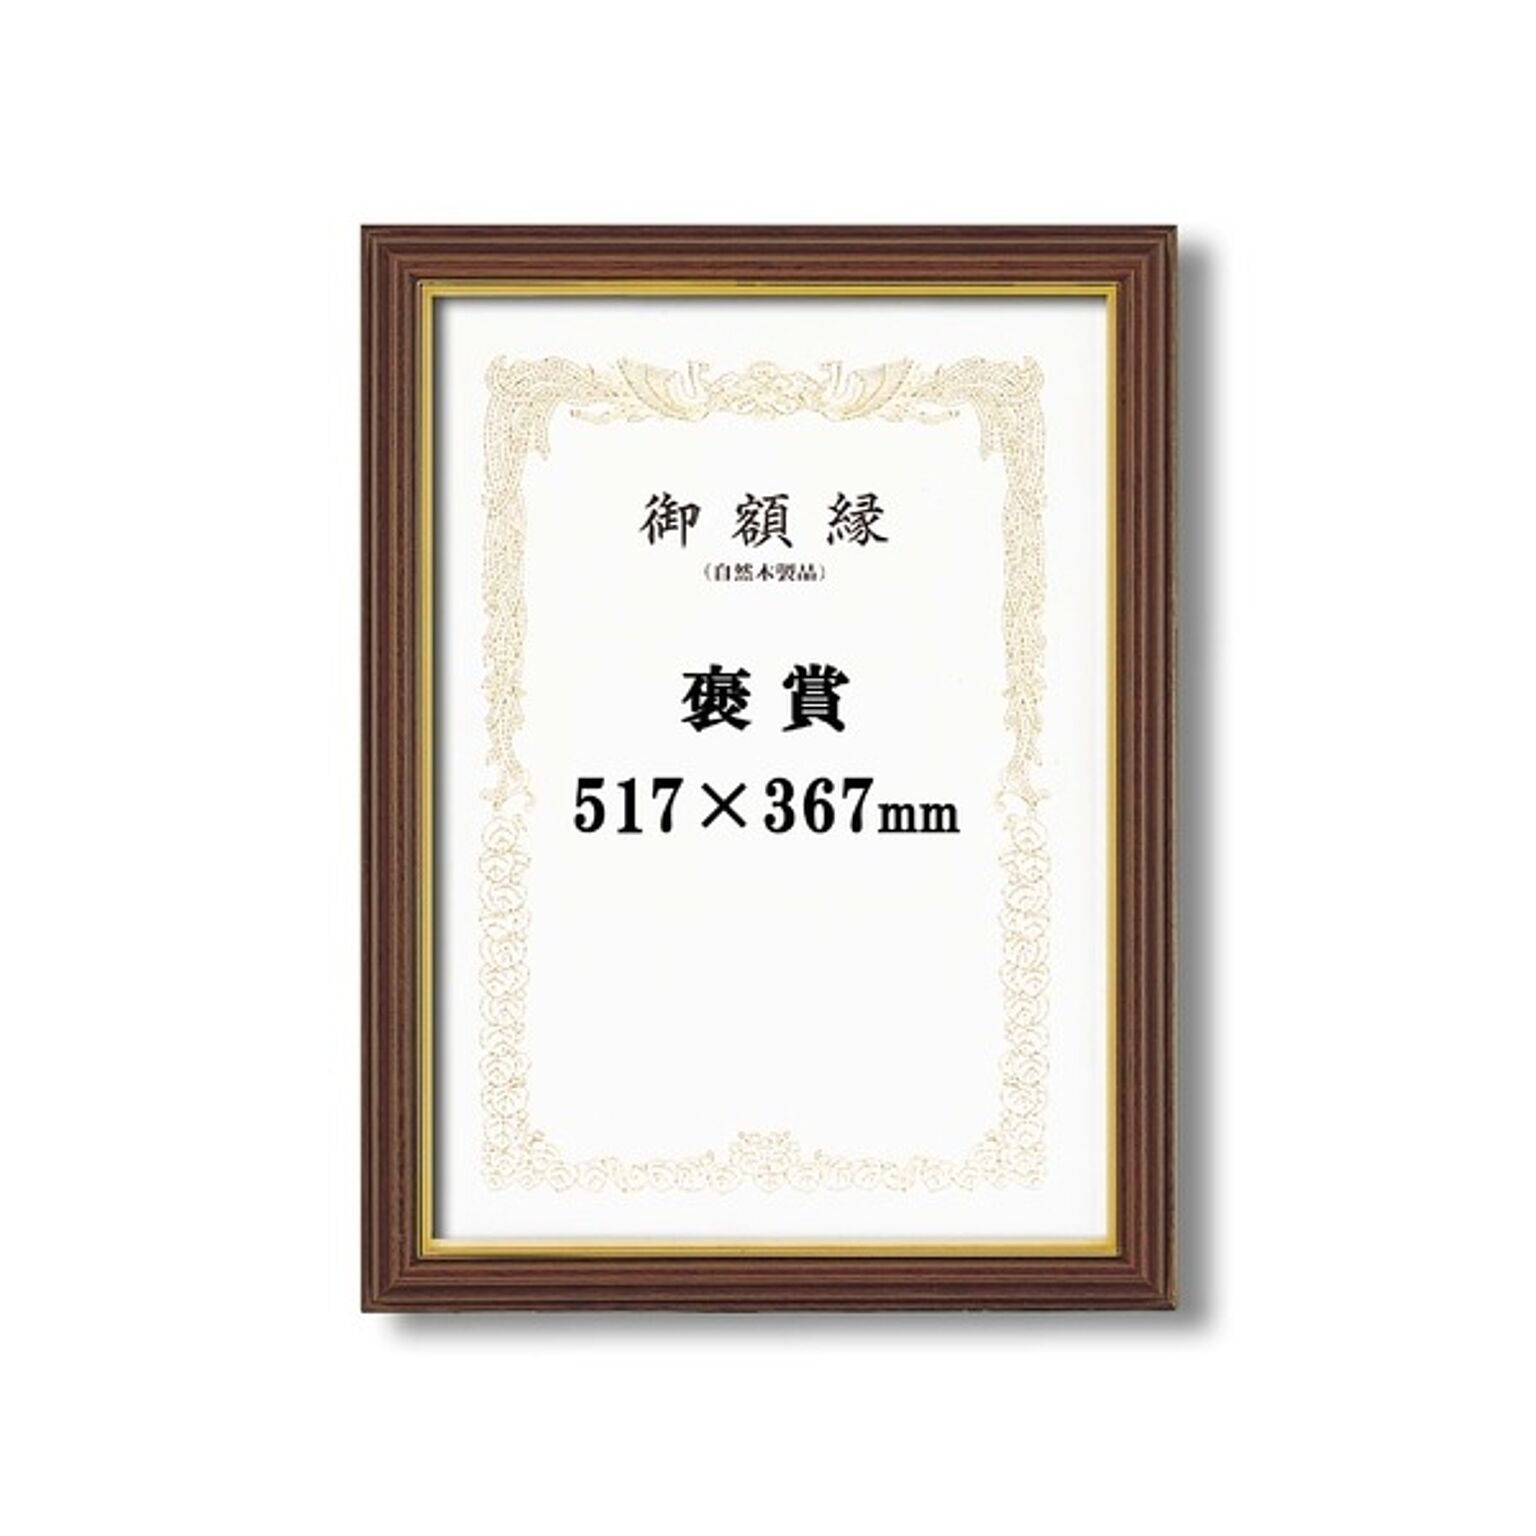 【受注生産 賞状額】 立体的な木製賞状額 ブラウン 魁三賞状額 褒賞 (517×367mm)